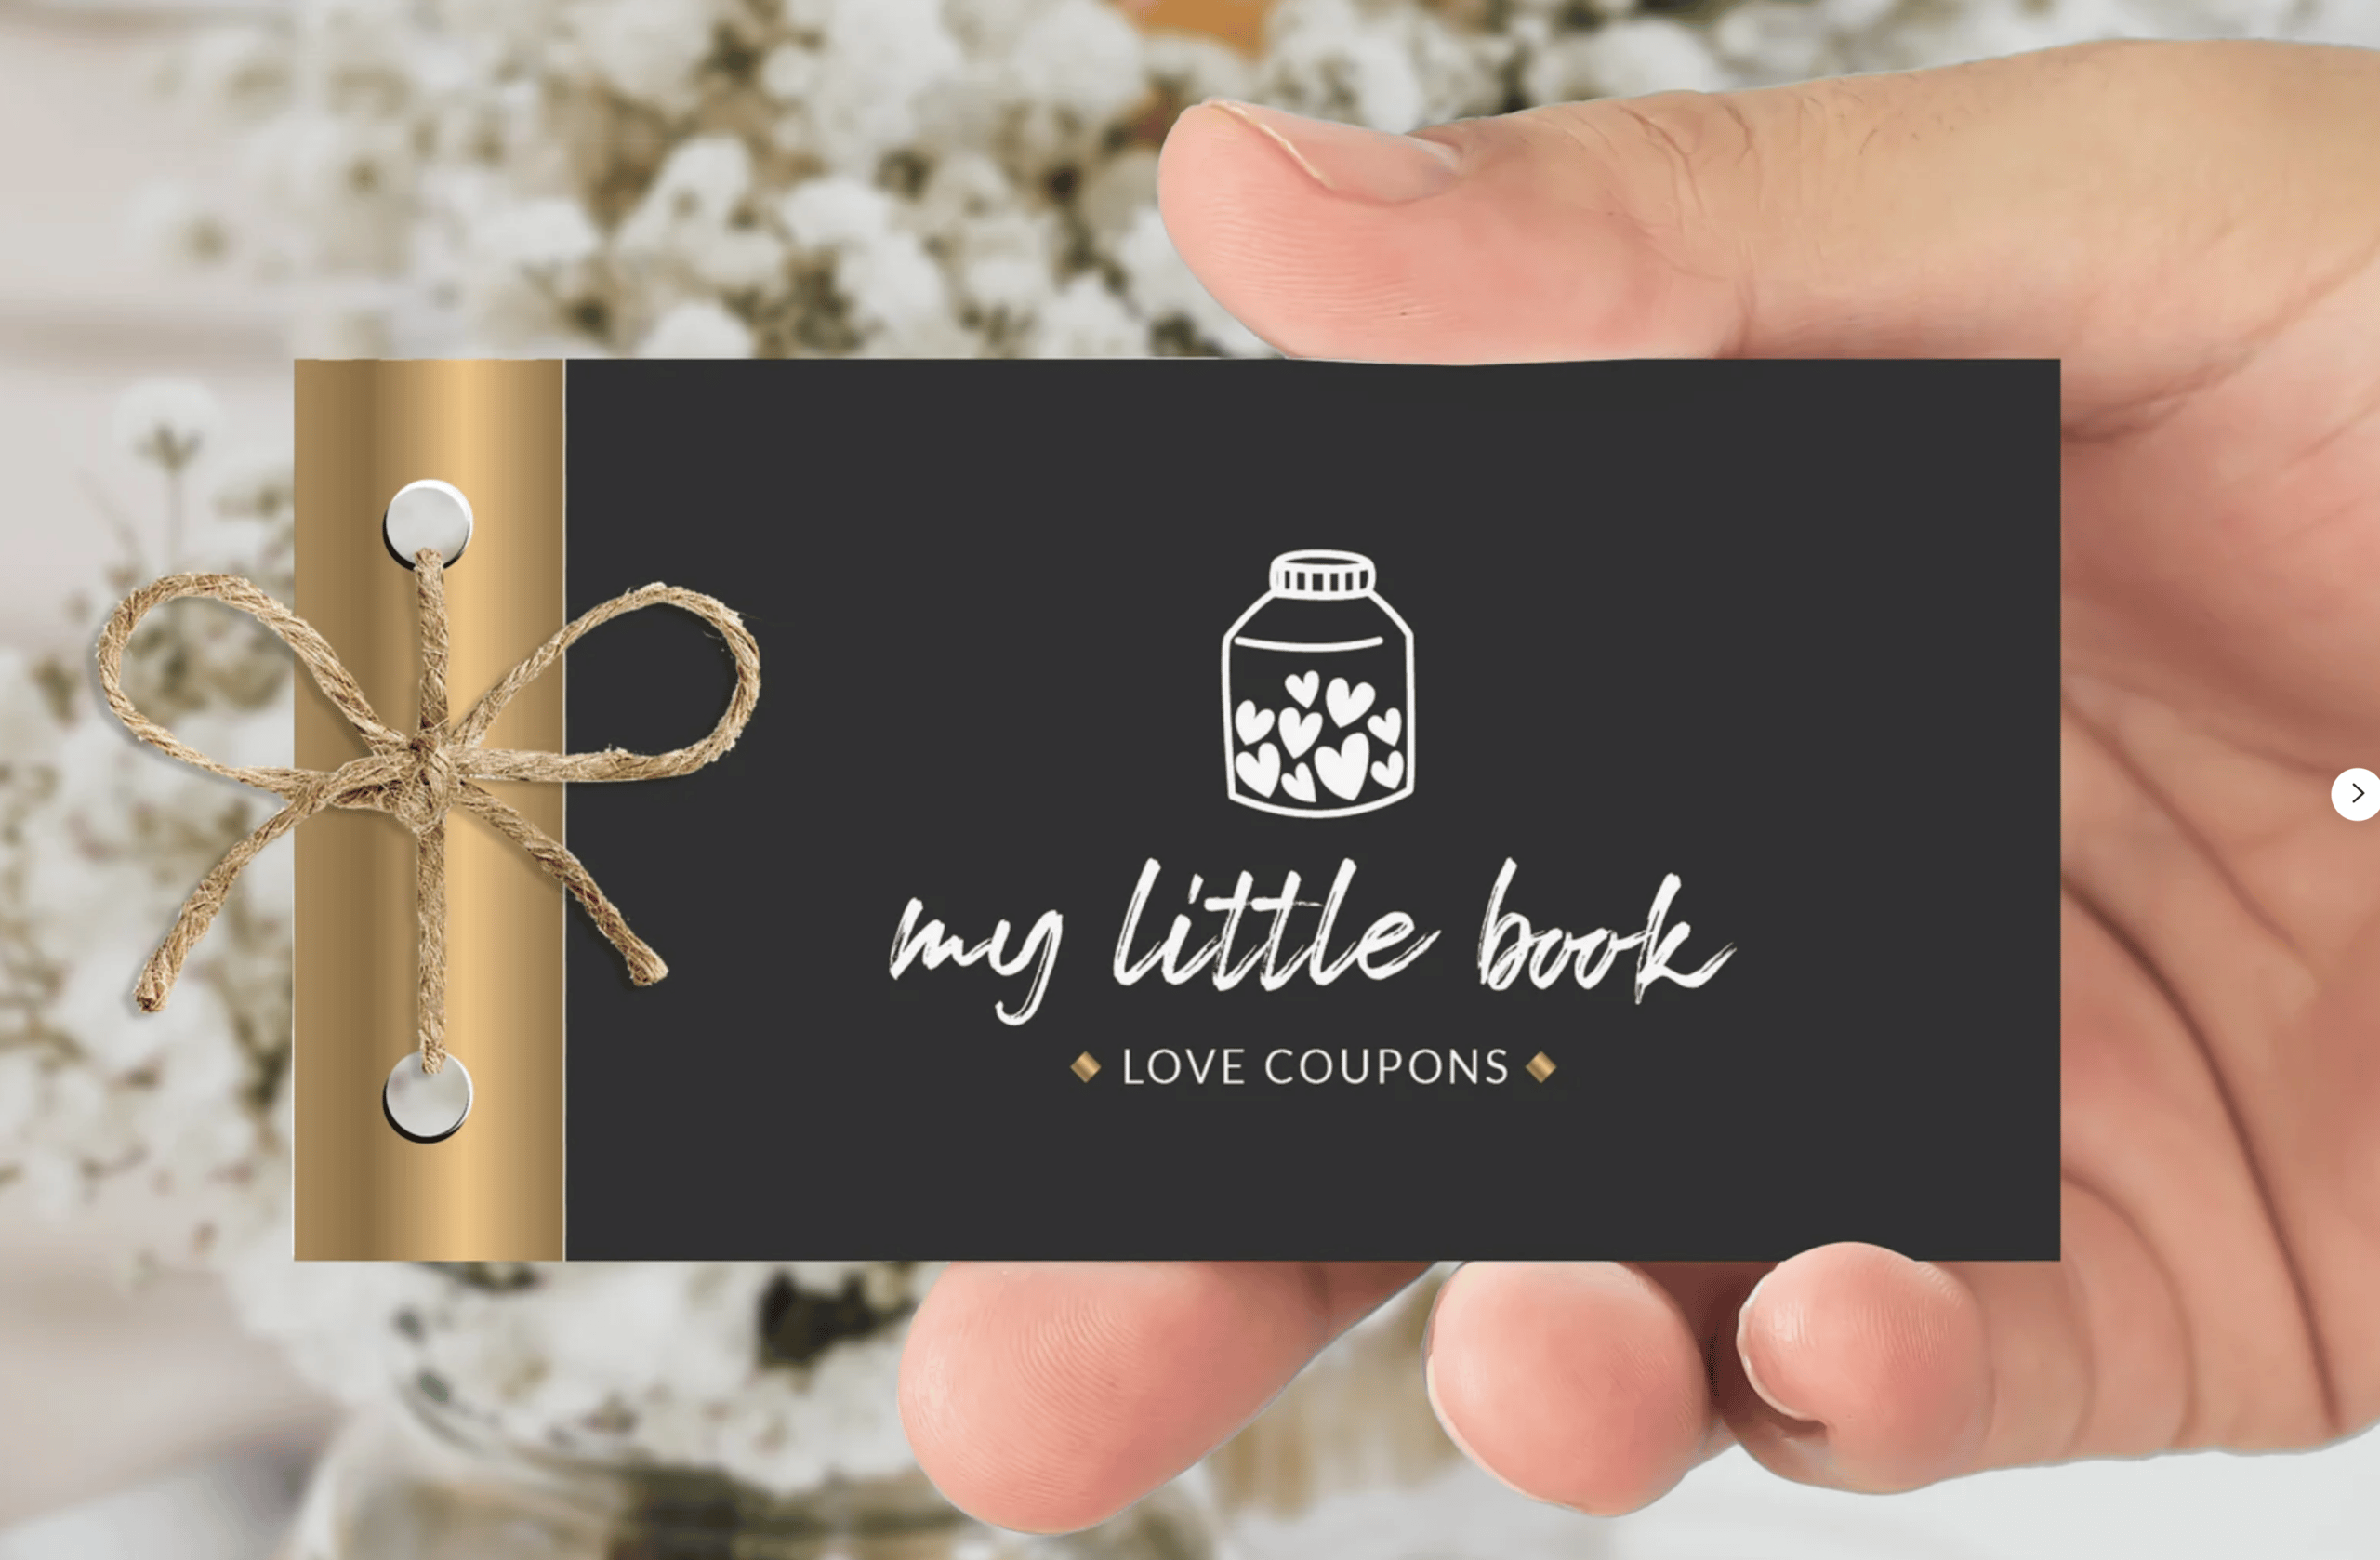 Little book of love | Gift ideas for boyfriend